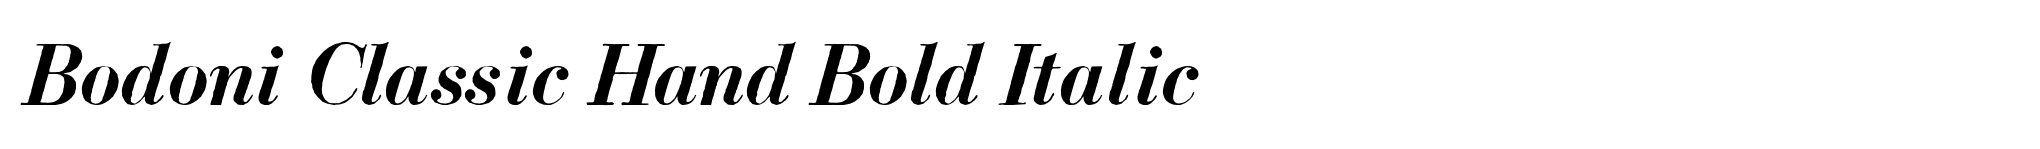 Bodoni Classic Hand Bold Italic image